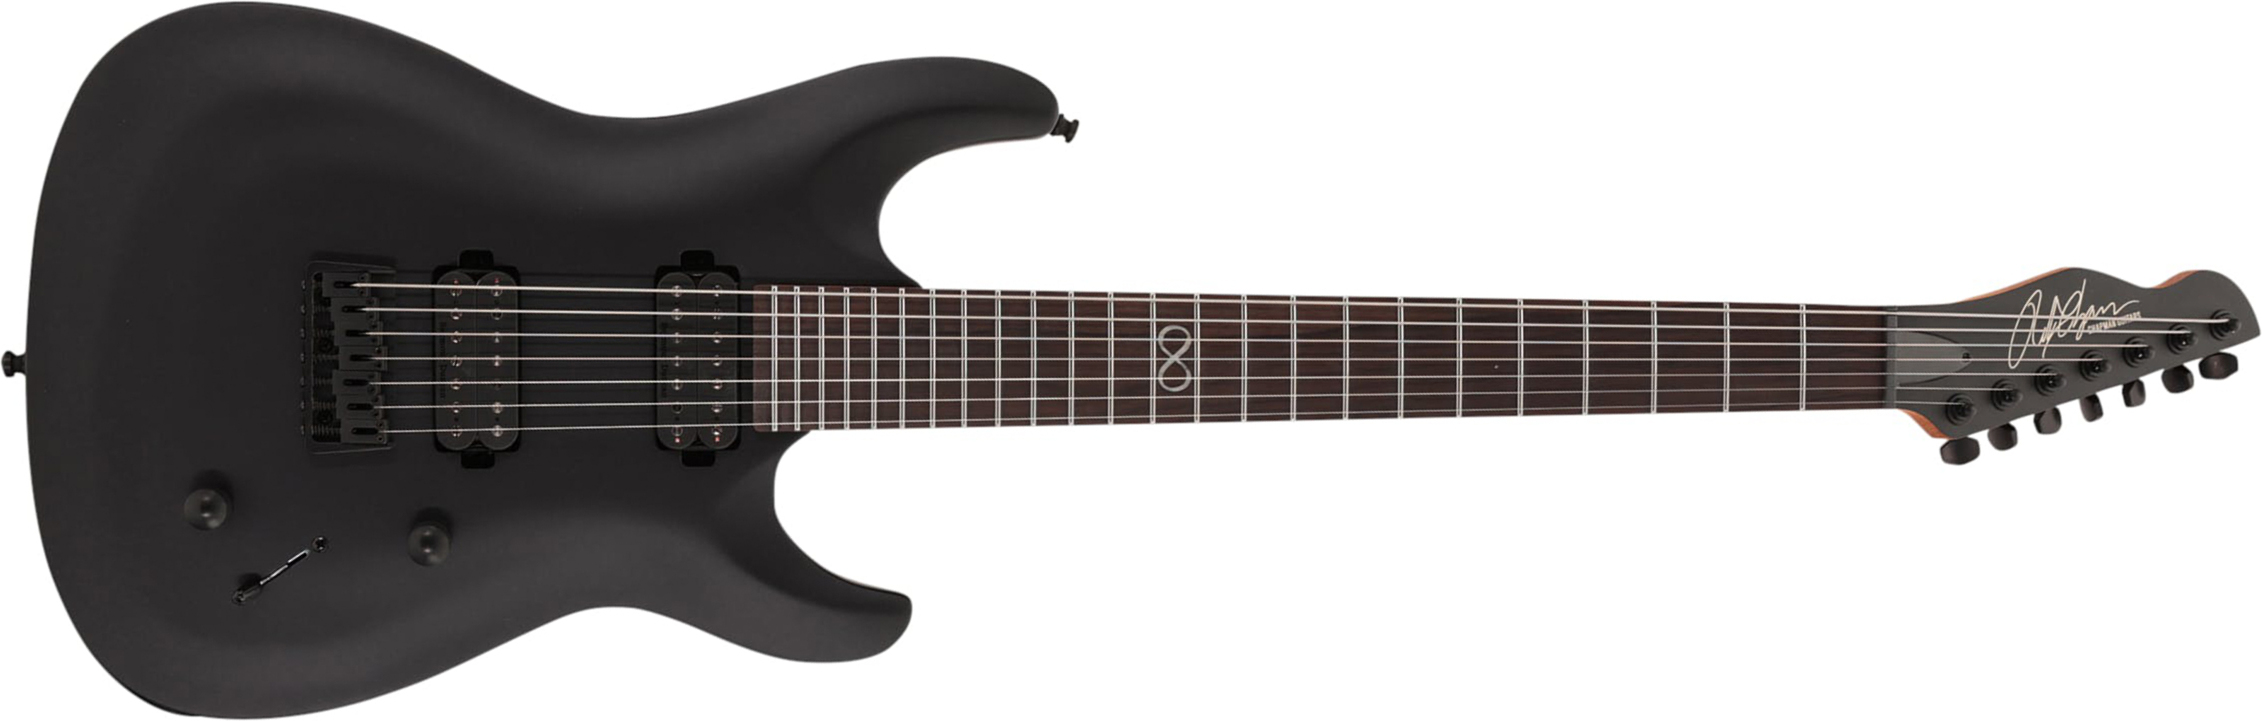 Chapman Guitars Ml1-7 Modern Pro 7c 2h Seymour Duncan  Ht Eb - Cyber Black - 7-saitige E-Gitarre - Main picture